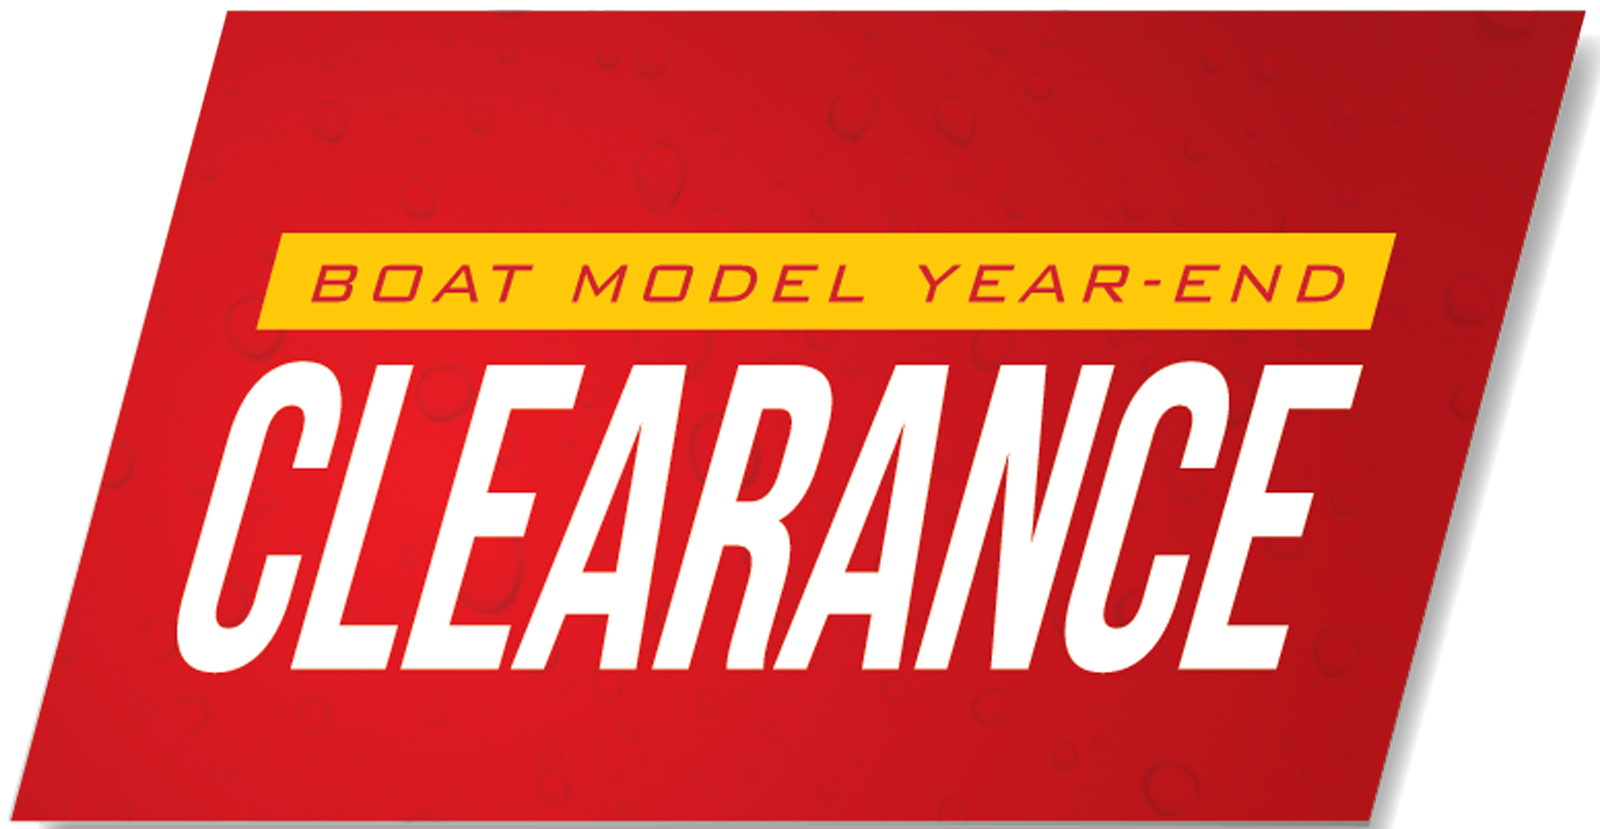 Clearance logo